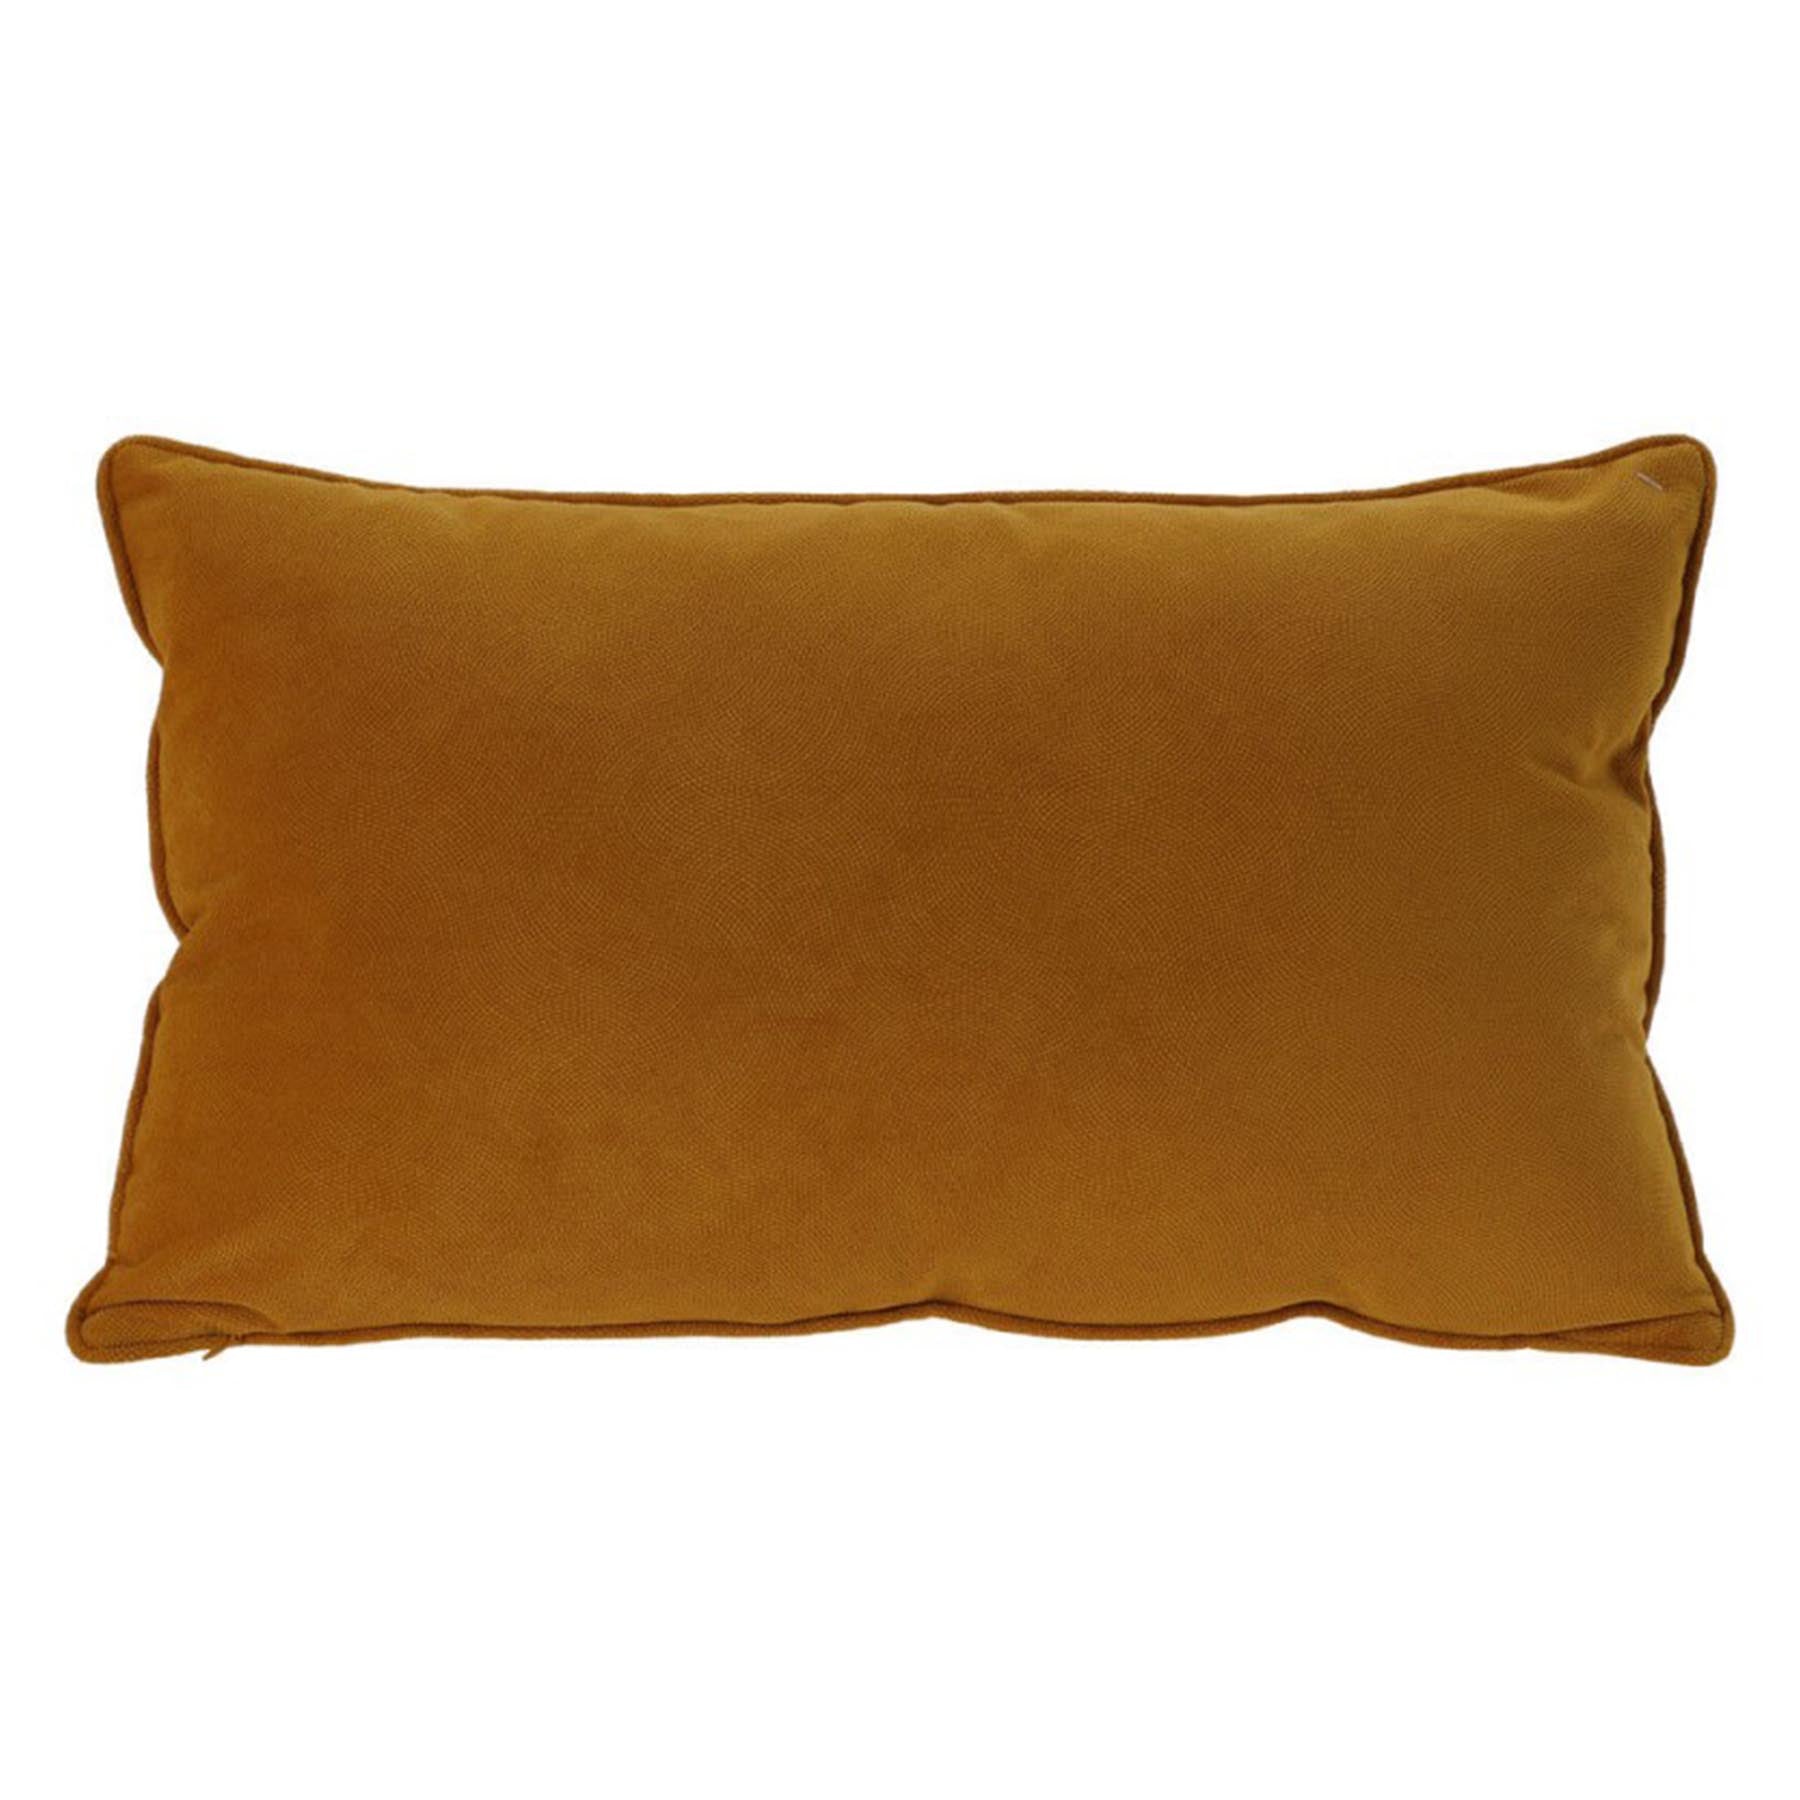 Decorative pillow - Orange